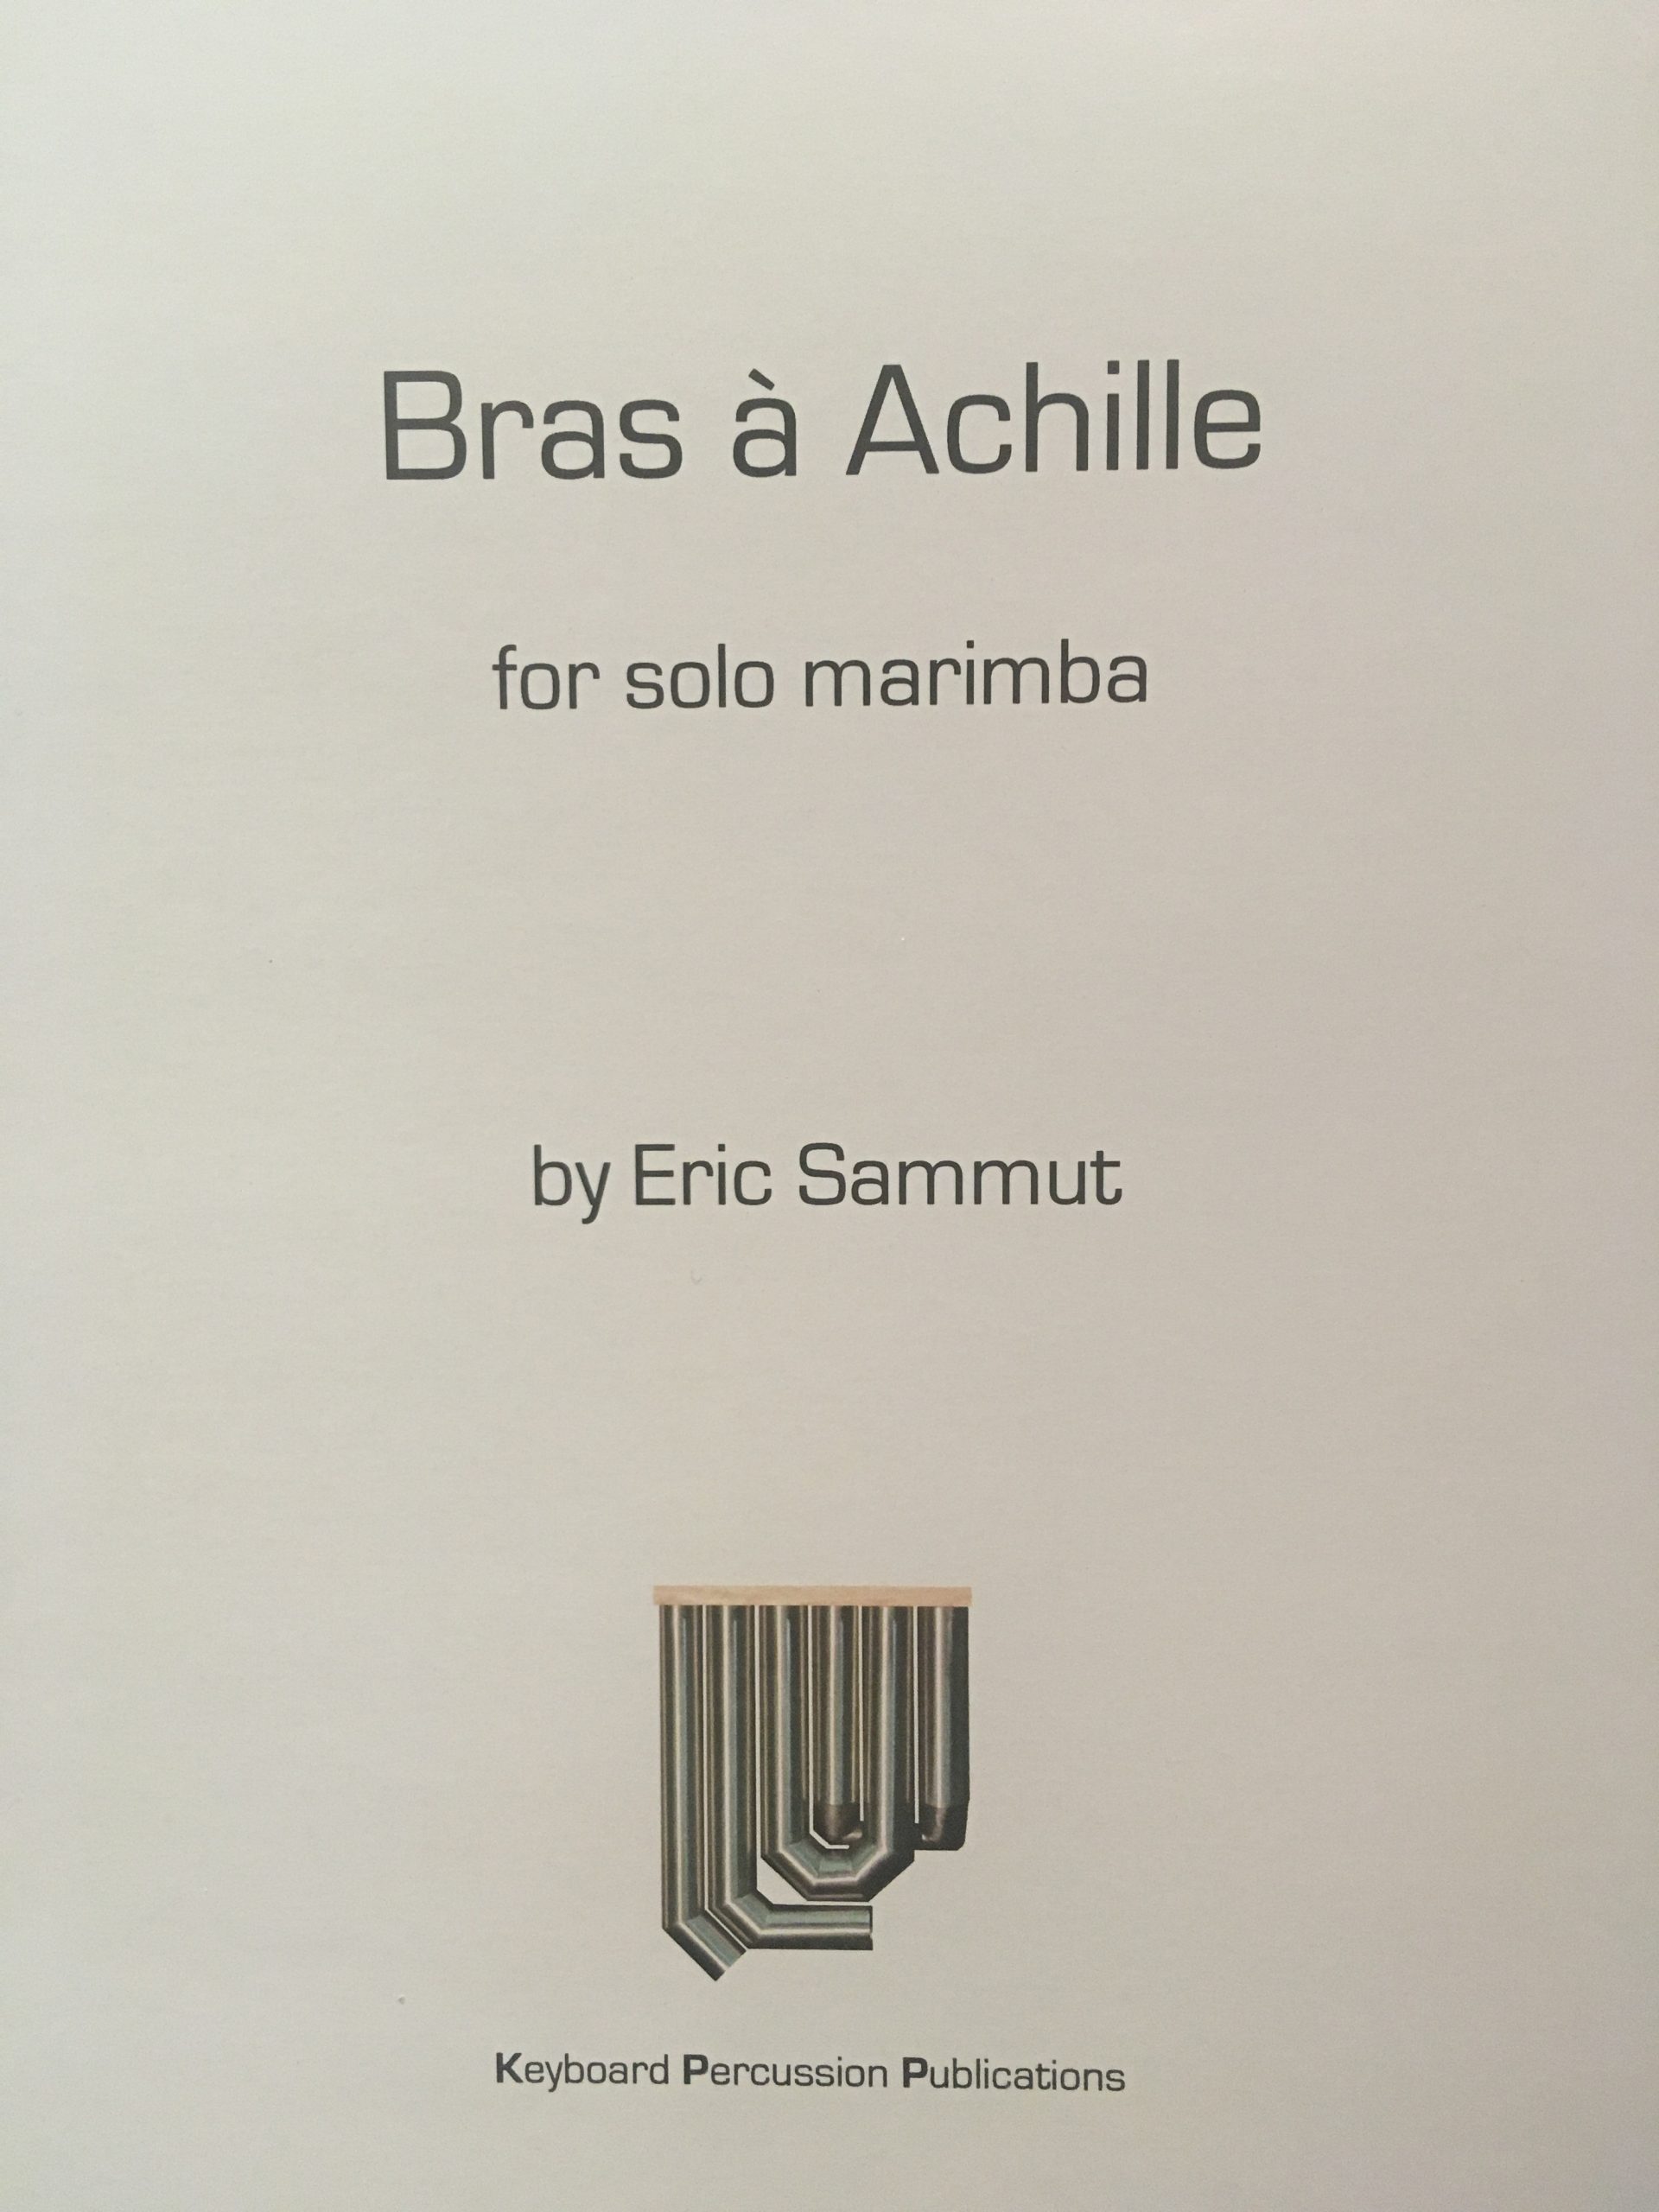 Bras a Achille by Eric Sammut